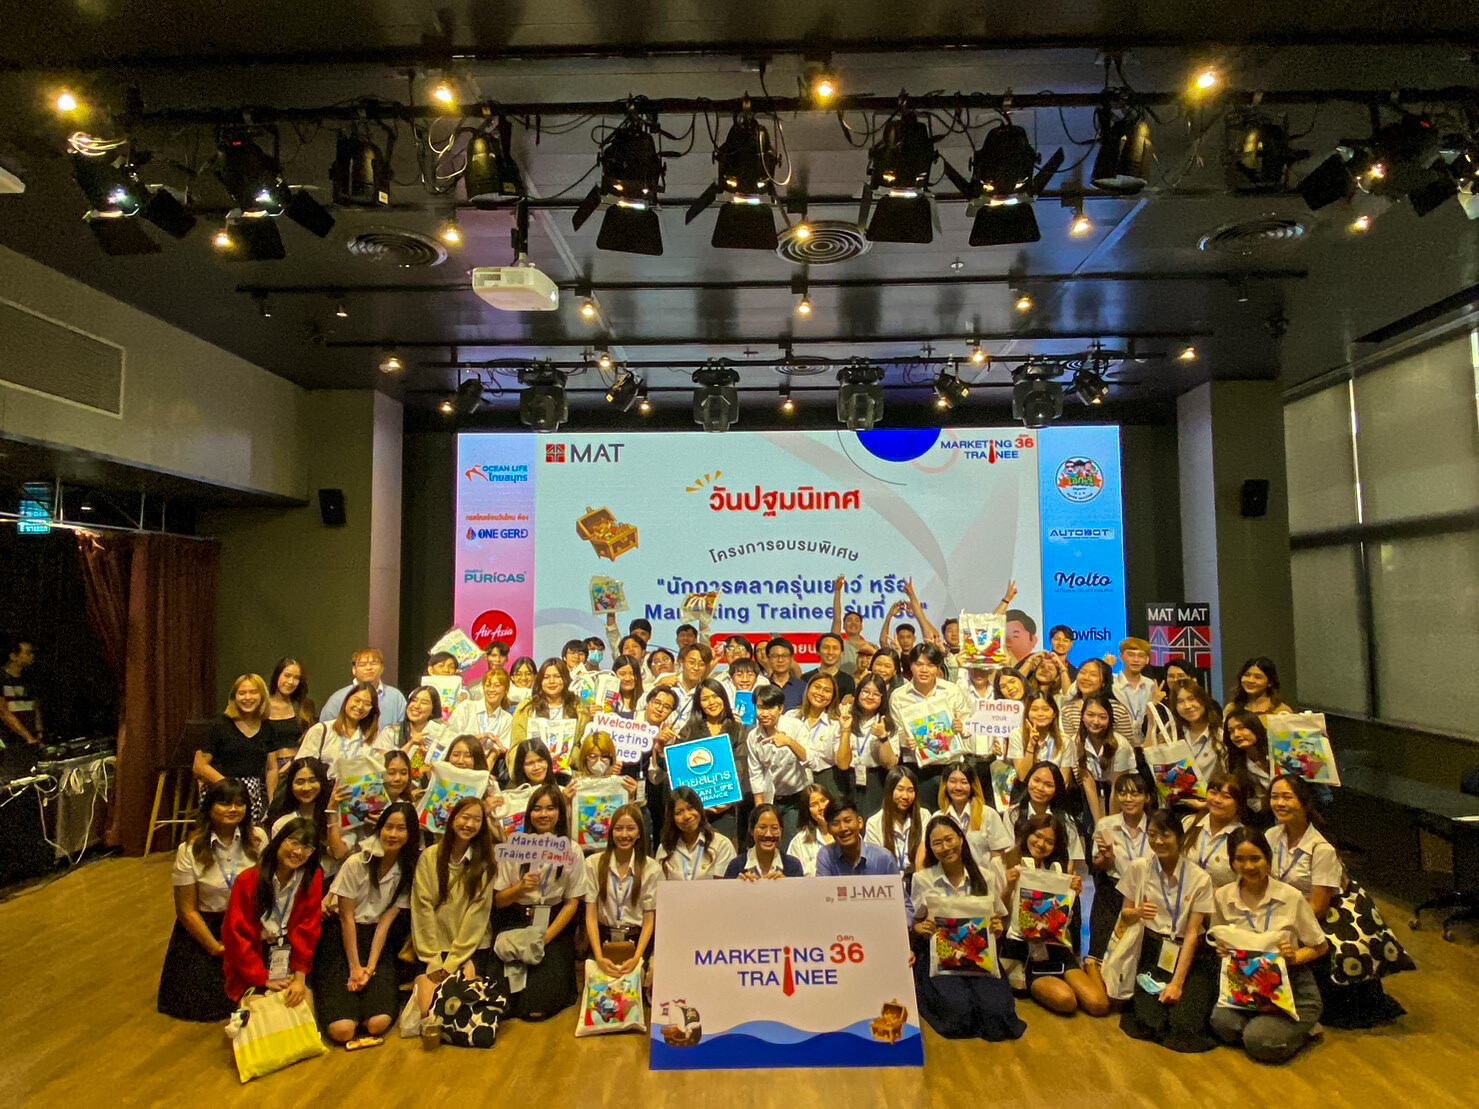 OCEAN LIFE ไทยสมุทร จับมือ สมาคมการตลาดแห่งประเทศไทย สนับสนุนสร้างนักการตลาด Gen Z ในโครงการอบรมพิเศษ Marketing Trainee รุ่นที่ 36